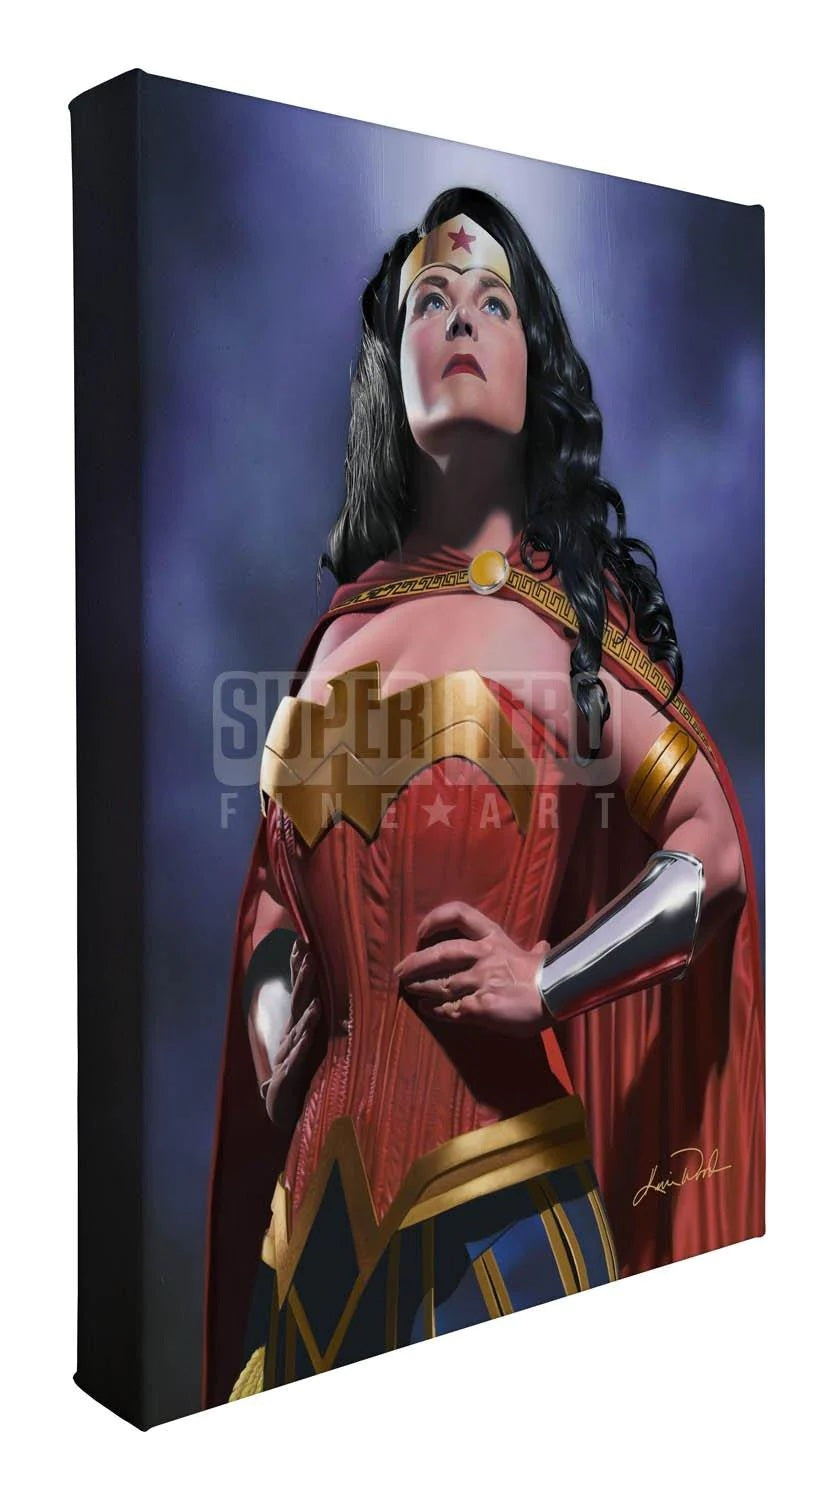 A realistic portrait of DC Comics Amazon Warrior - Wonder Woman.